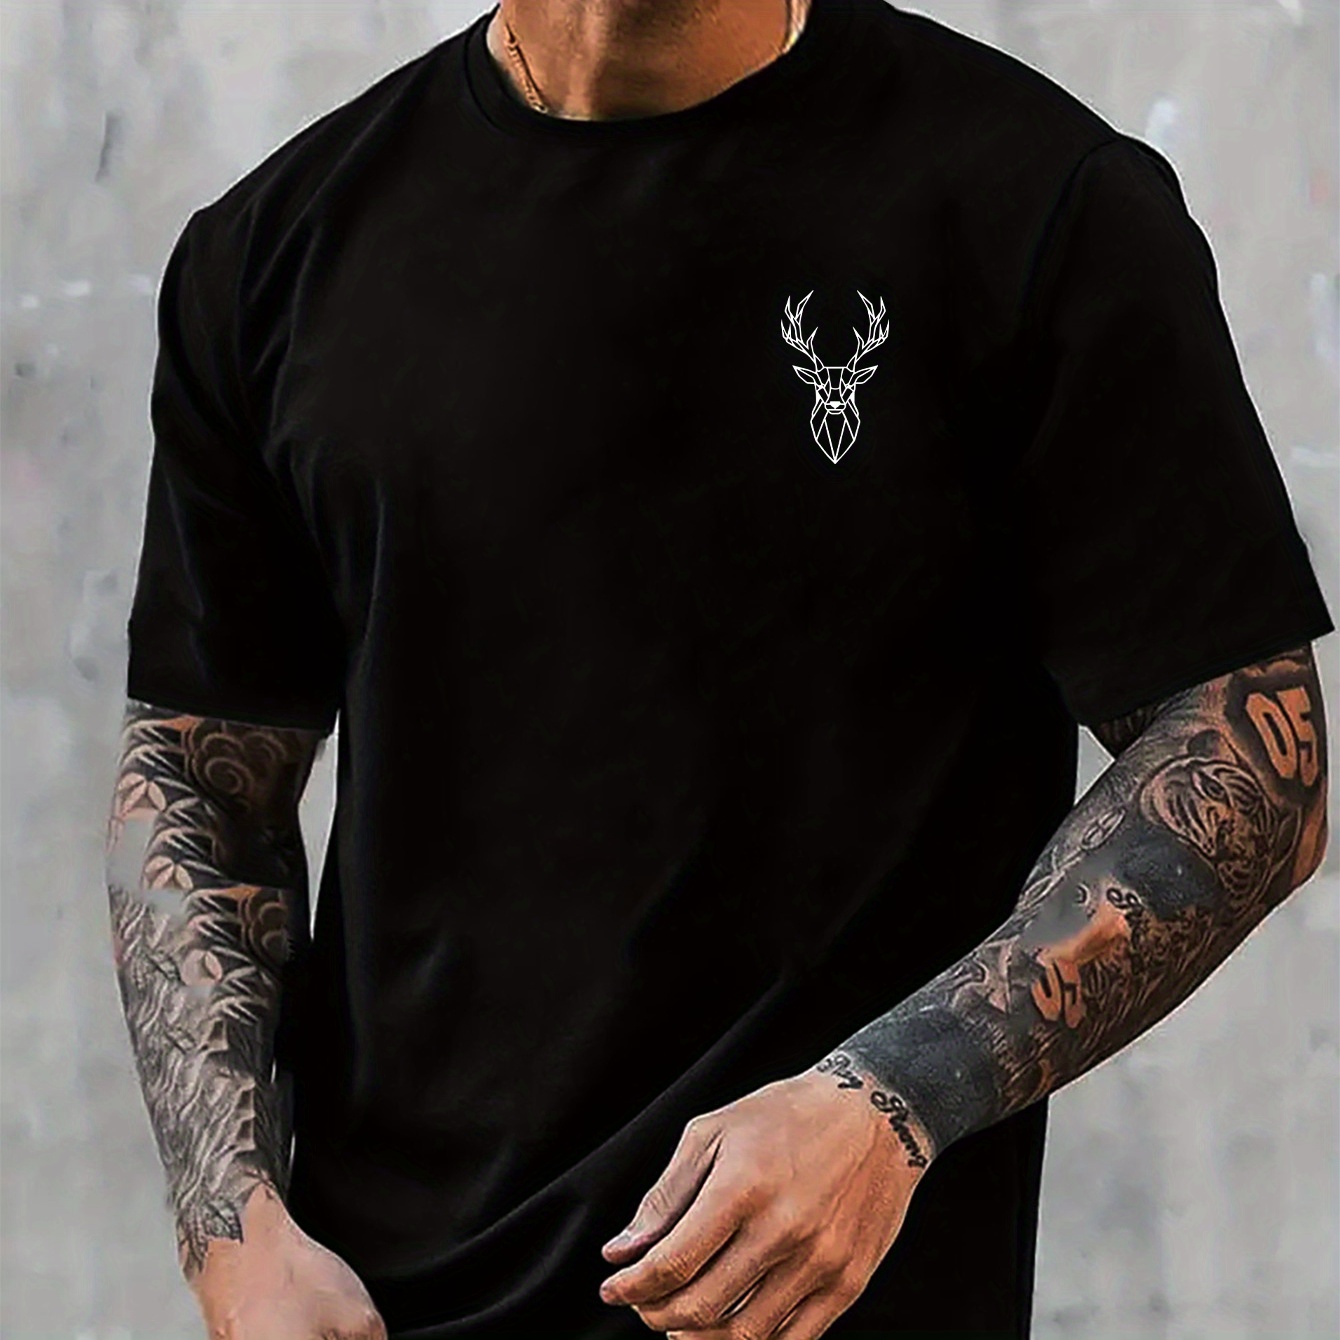 

Men With Deer Print T-shirts, Round Crew Neck Short Sleeve Casual T-shirt & Comfy Lightweight Top For Summer & Running